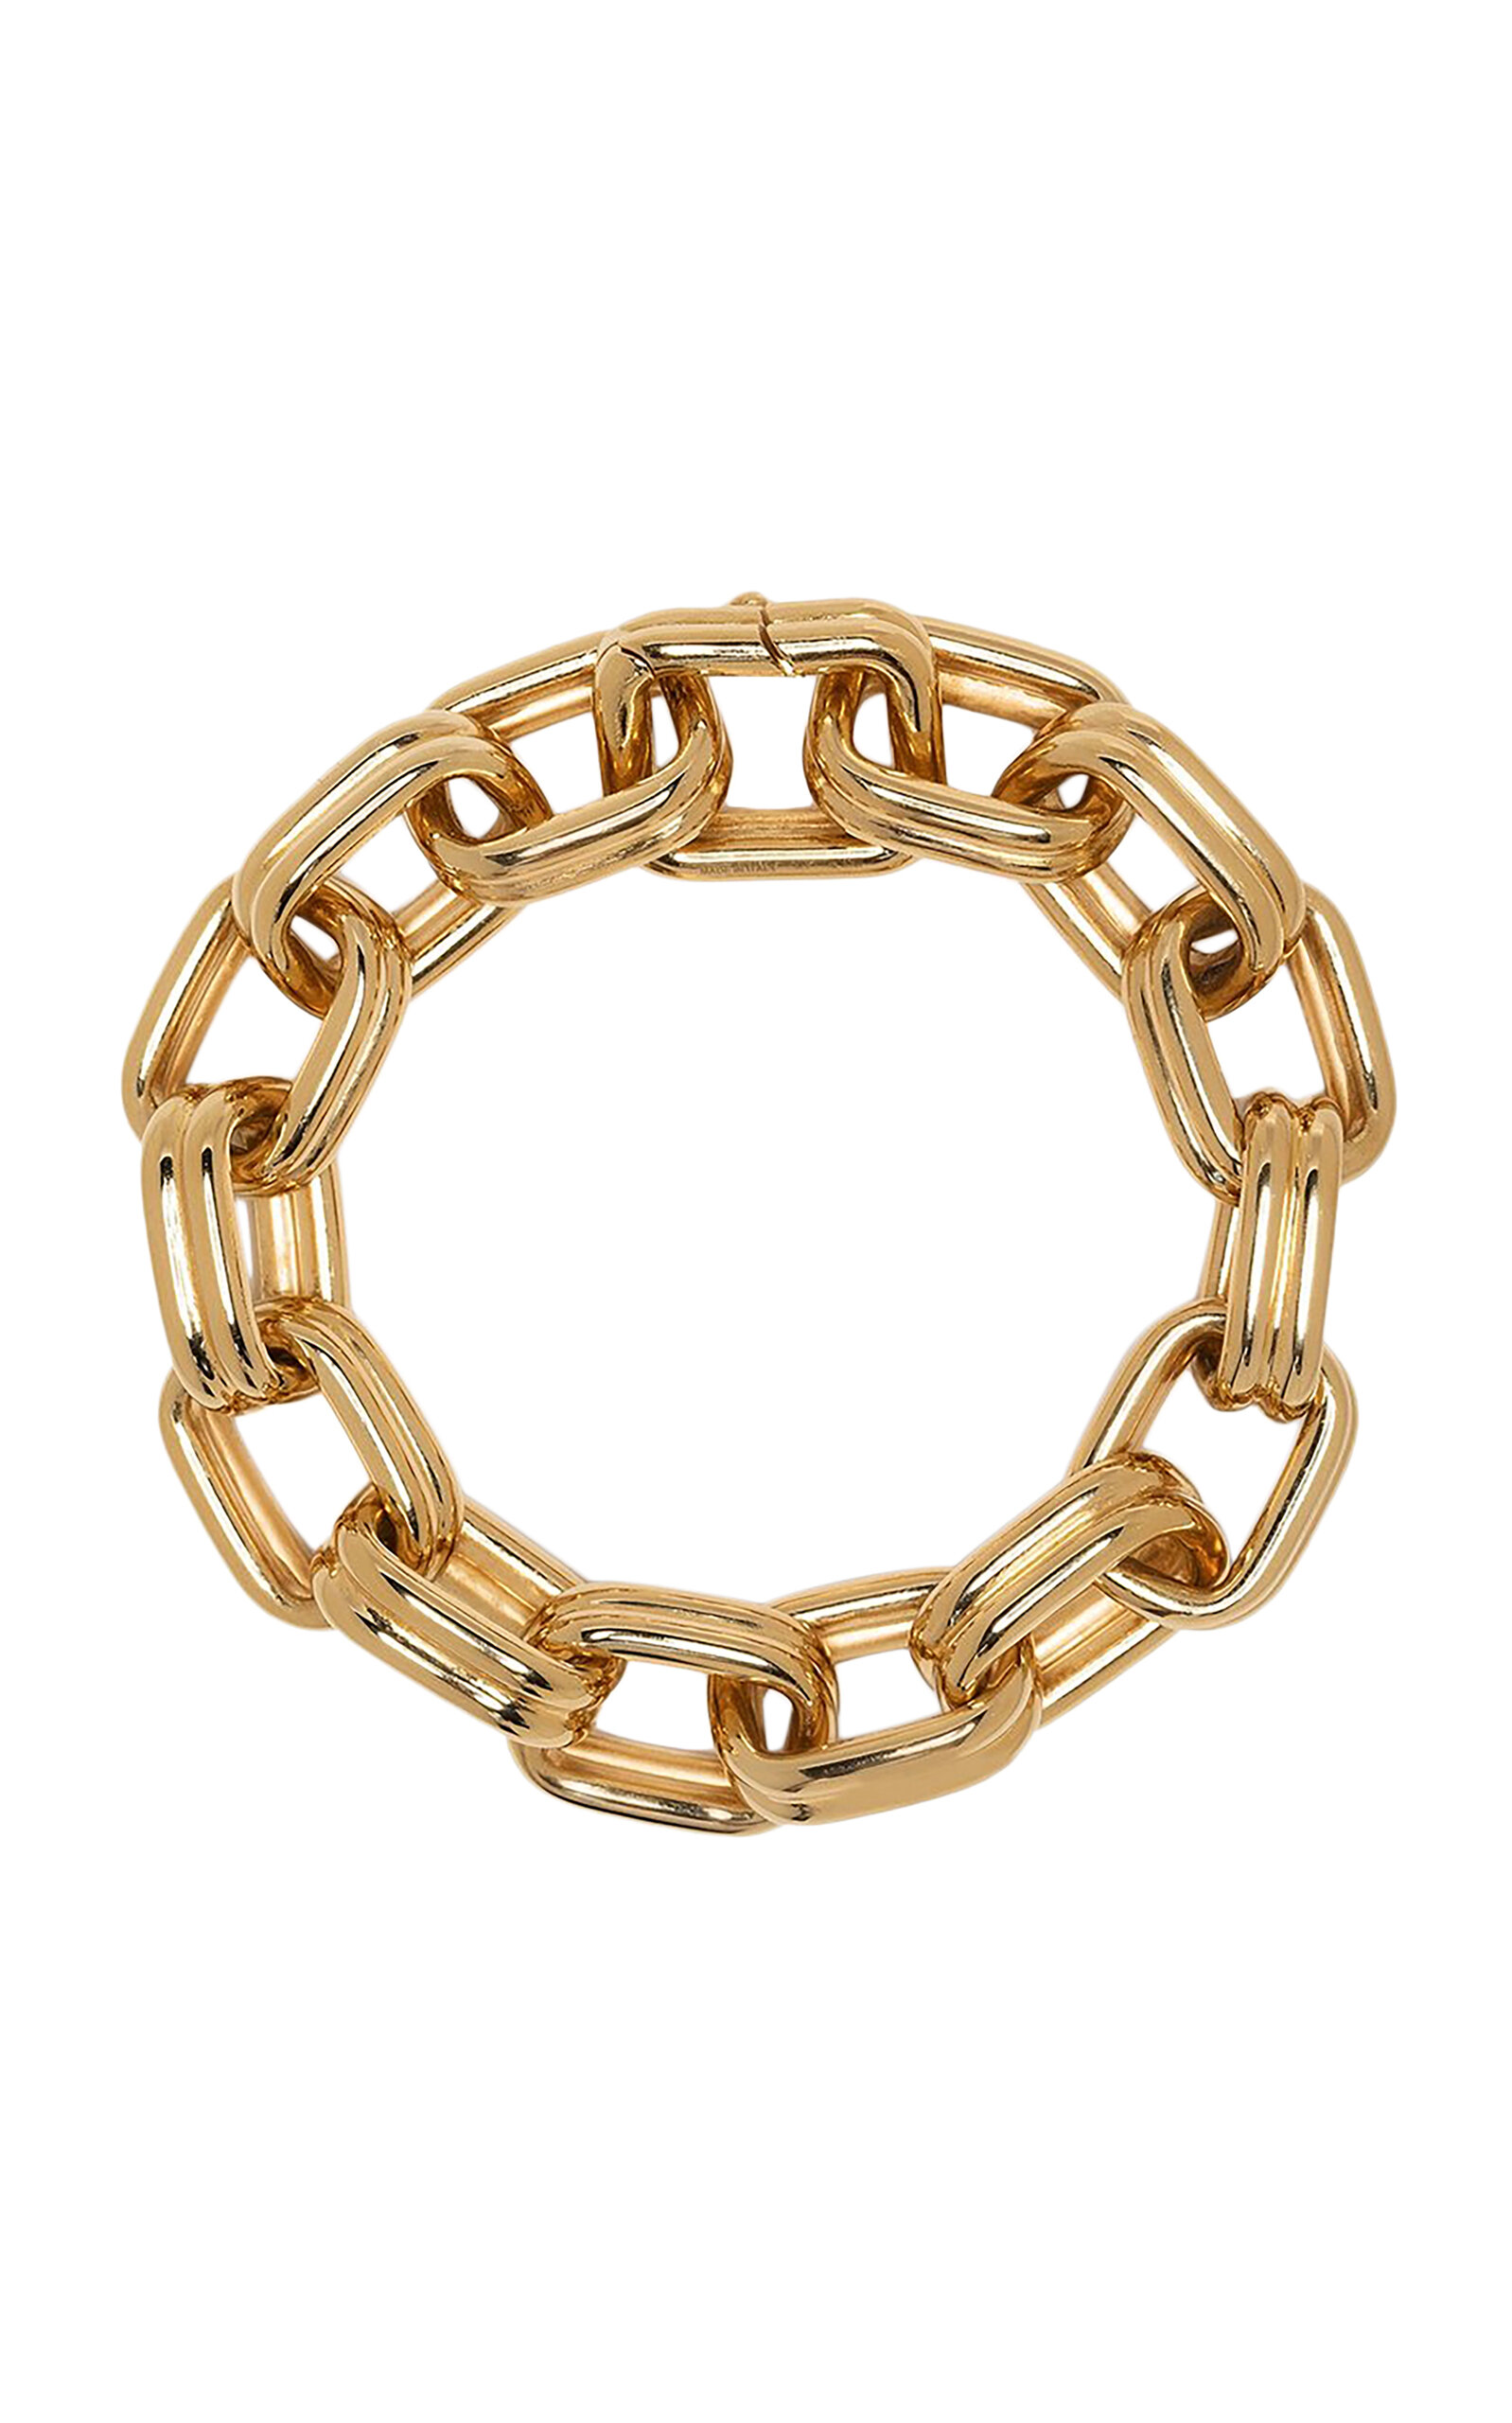 IVI Women's Toy 18k Gold-Plated Chain Bracelet